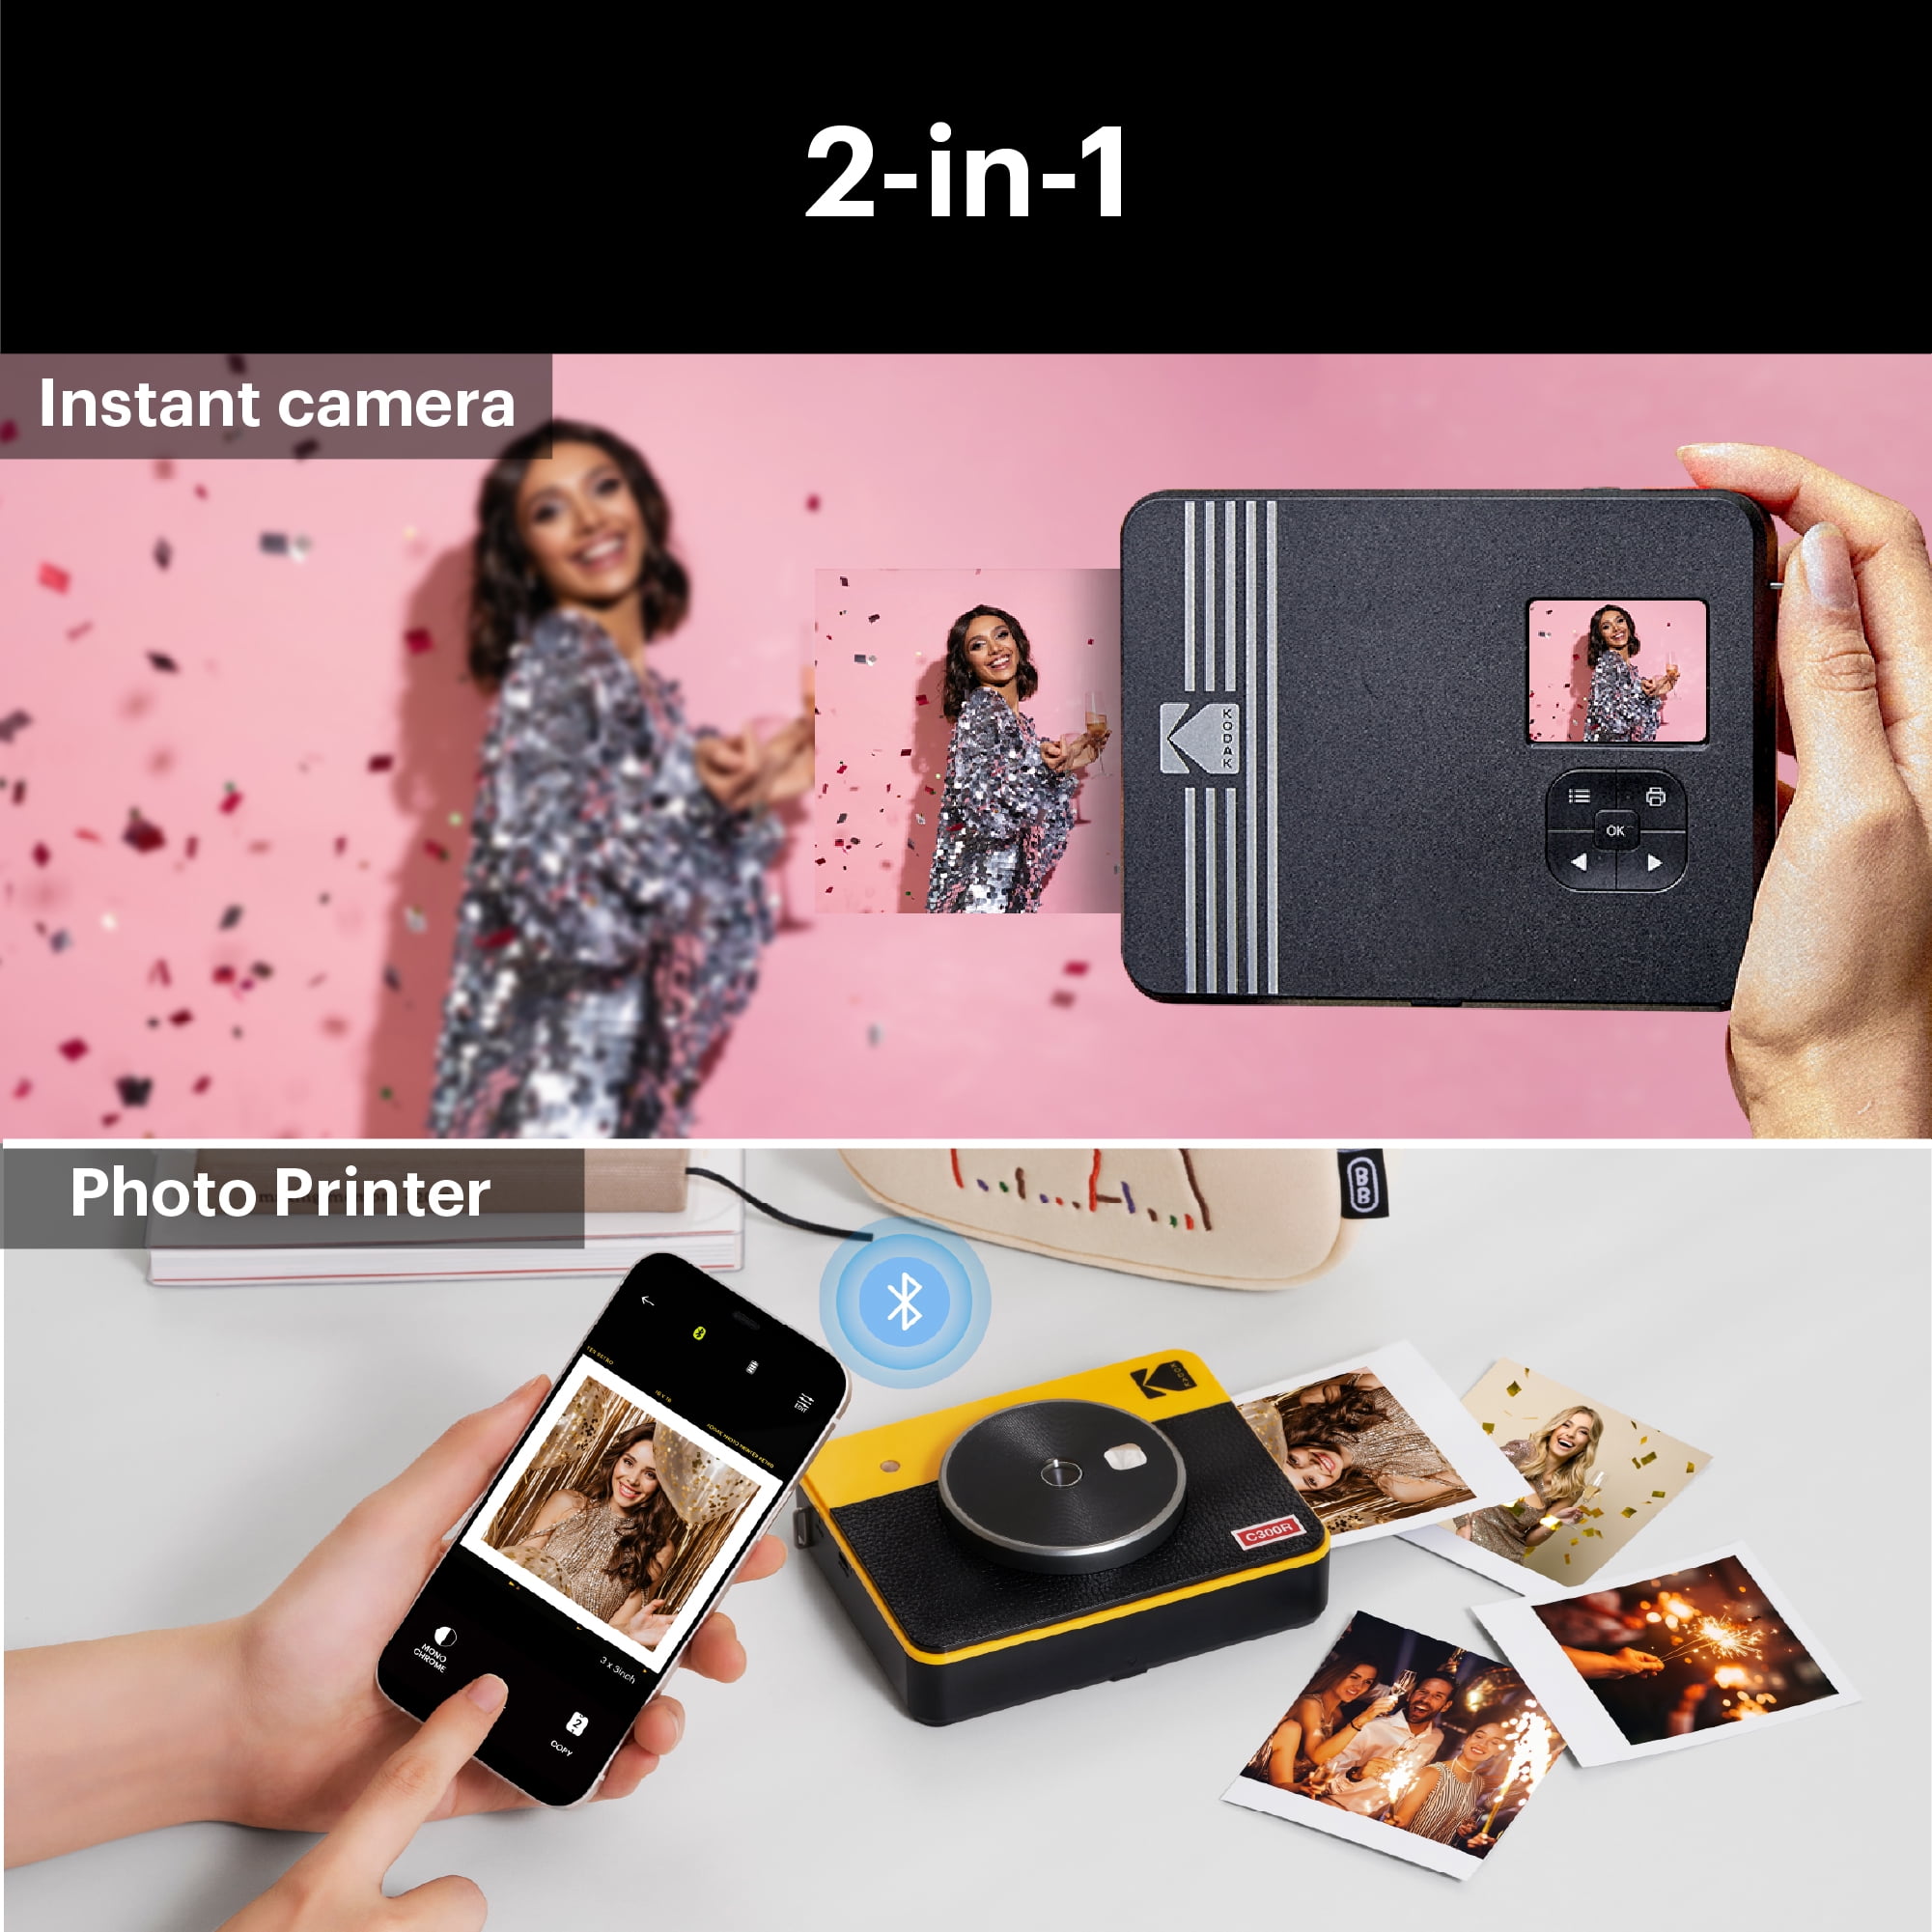 Kodak Mini Shot 3 Retro Instant Camera + Smartphone Compatible Printer +8  Sheets